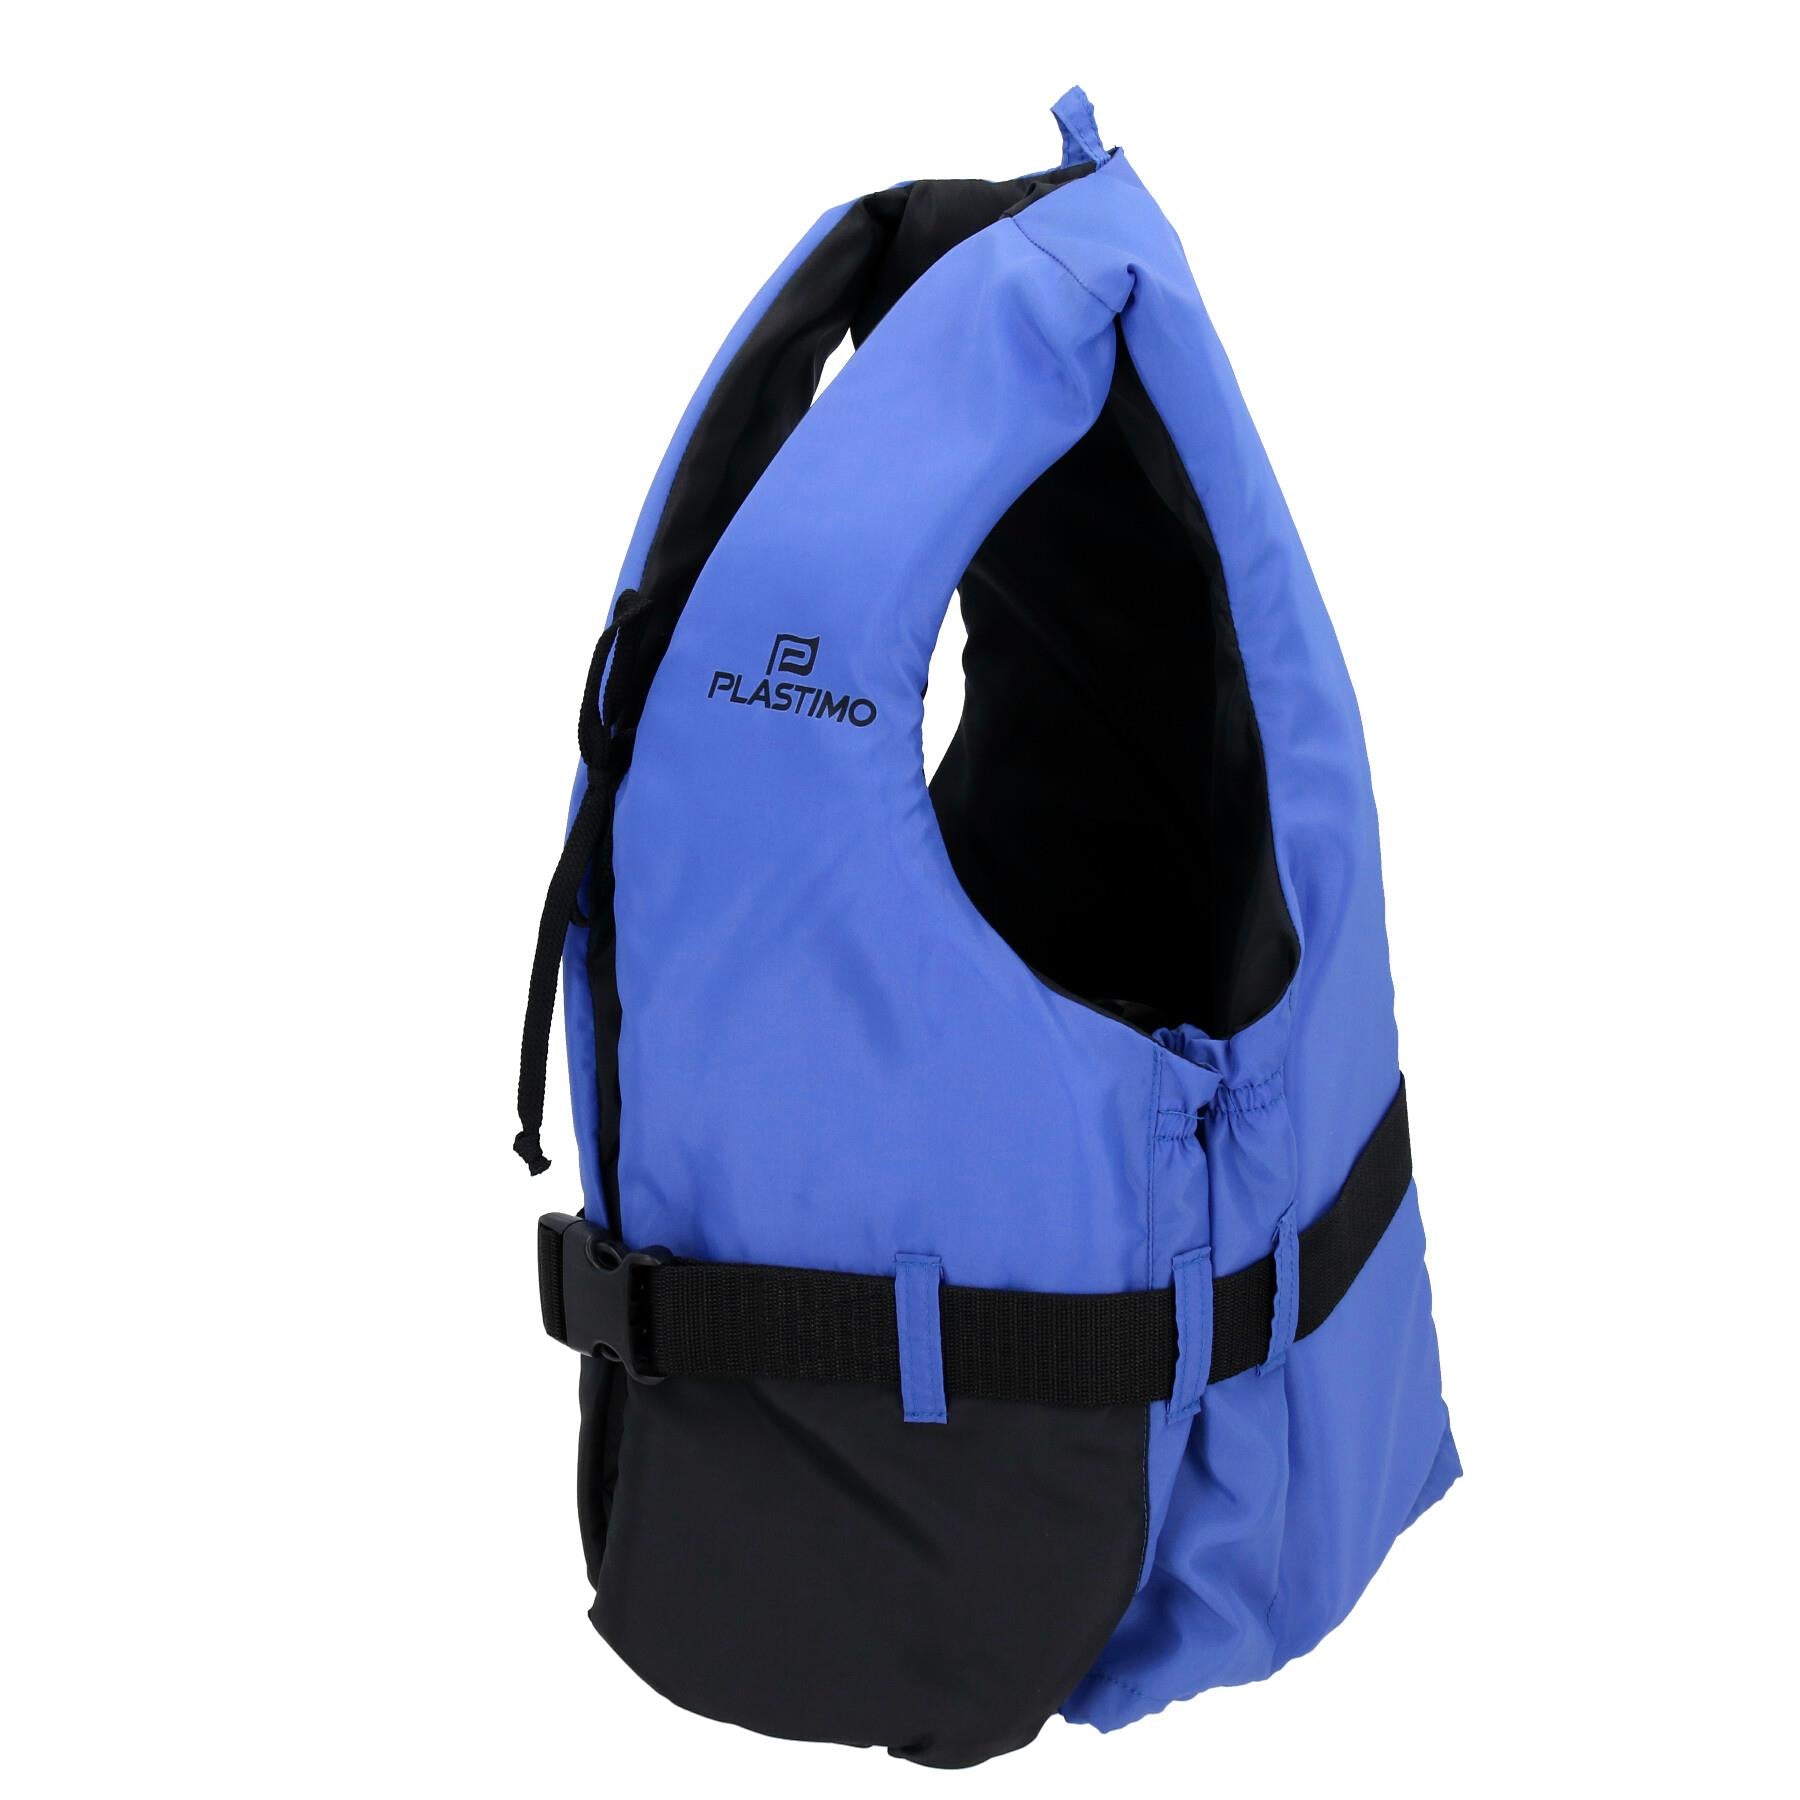 Large 70kg to 90kg Adult Buoyancy Aid Plastimo Olympia 50N Personal Floatation Jacket Device